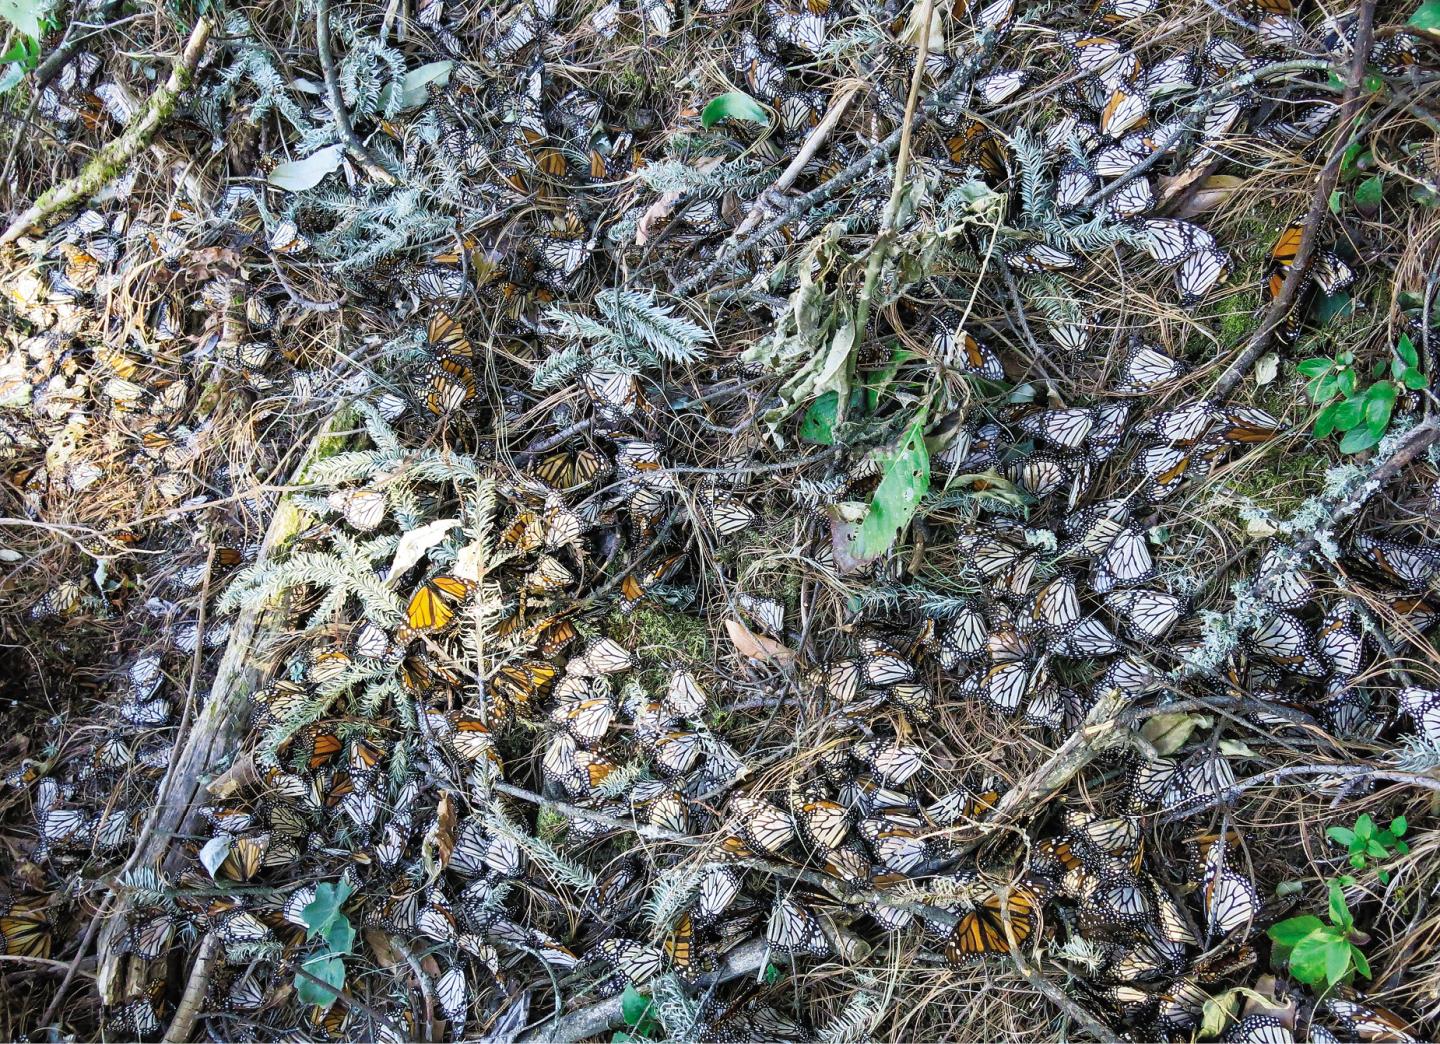 Dead Monarch Butterflies Among Storm Debris